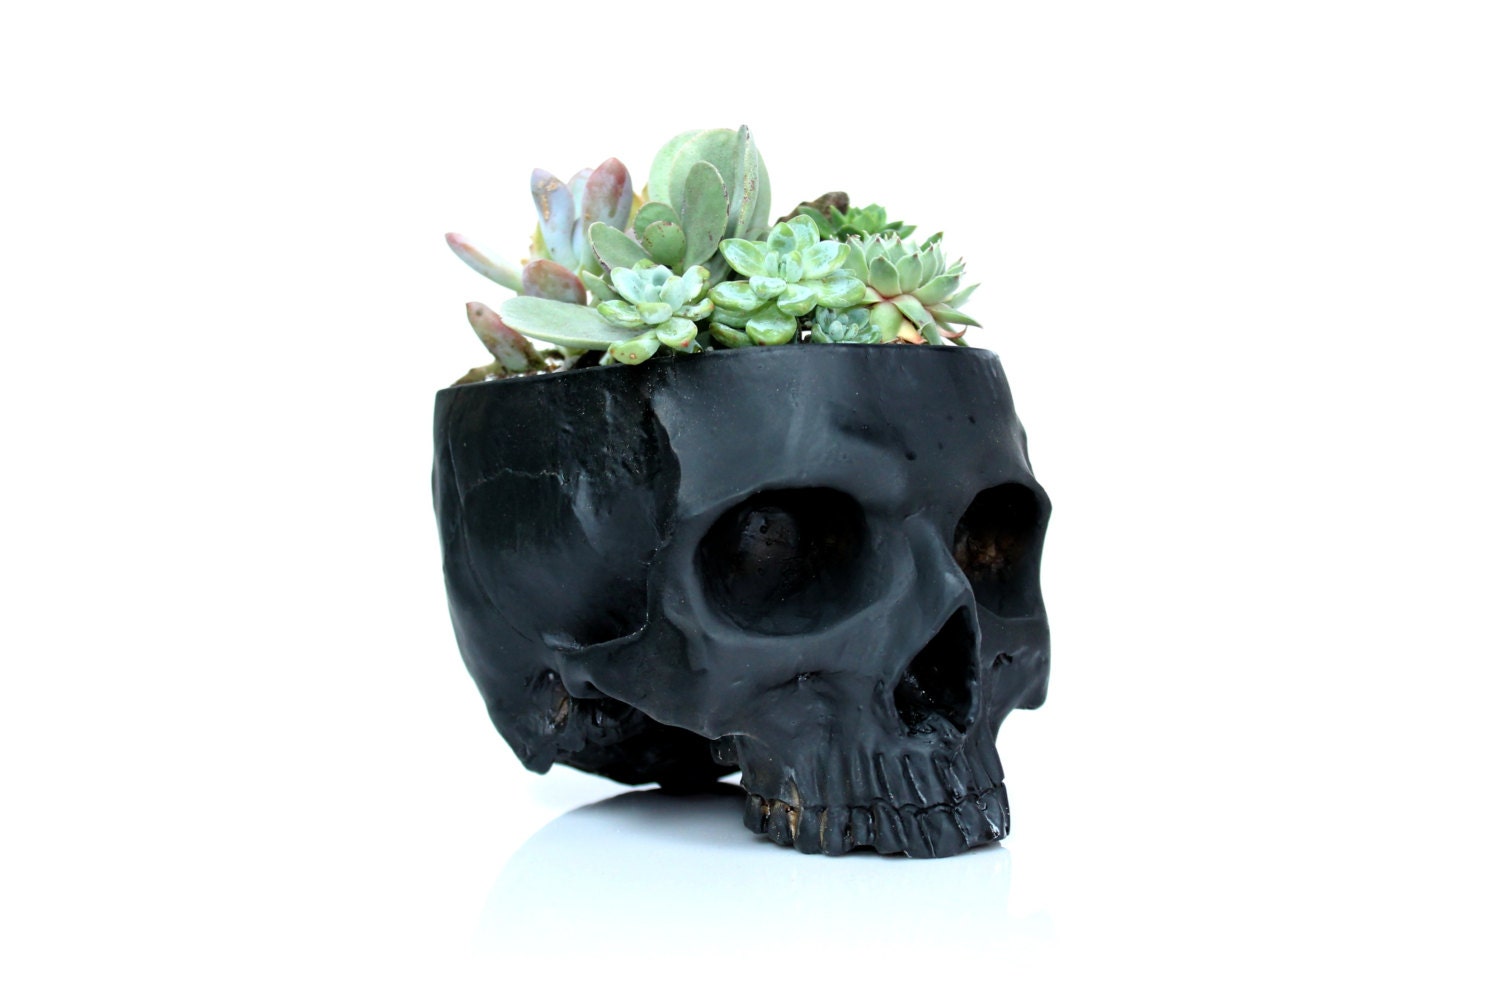  Skull  Planter  Large Succulents Gift Skull  Pot  Skull  Candy